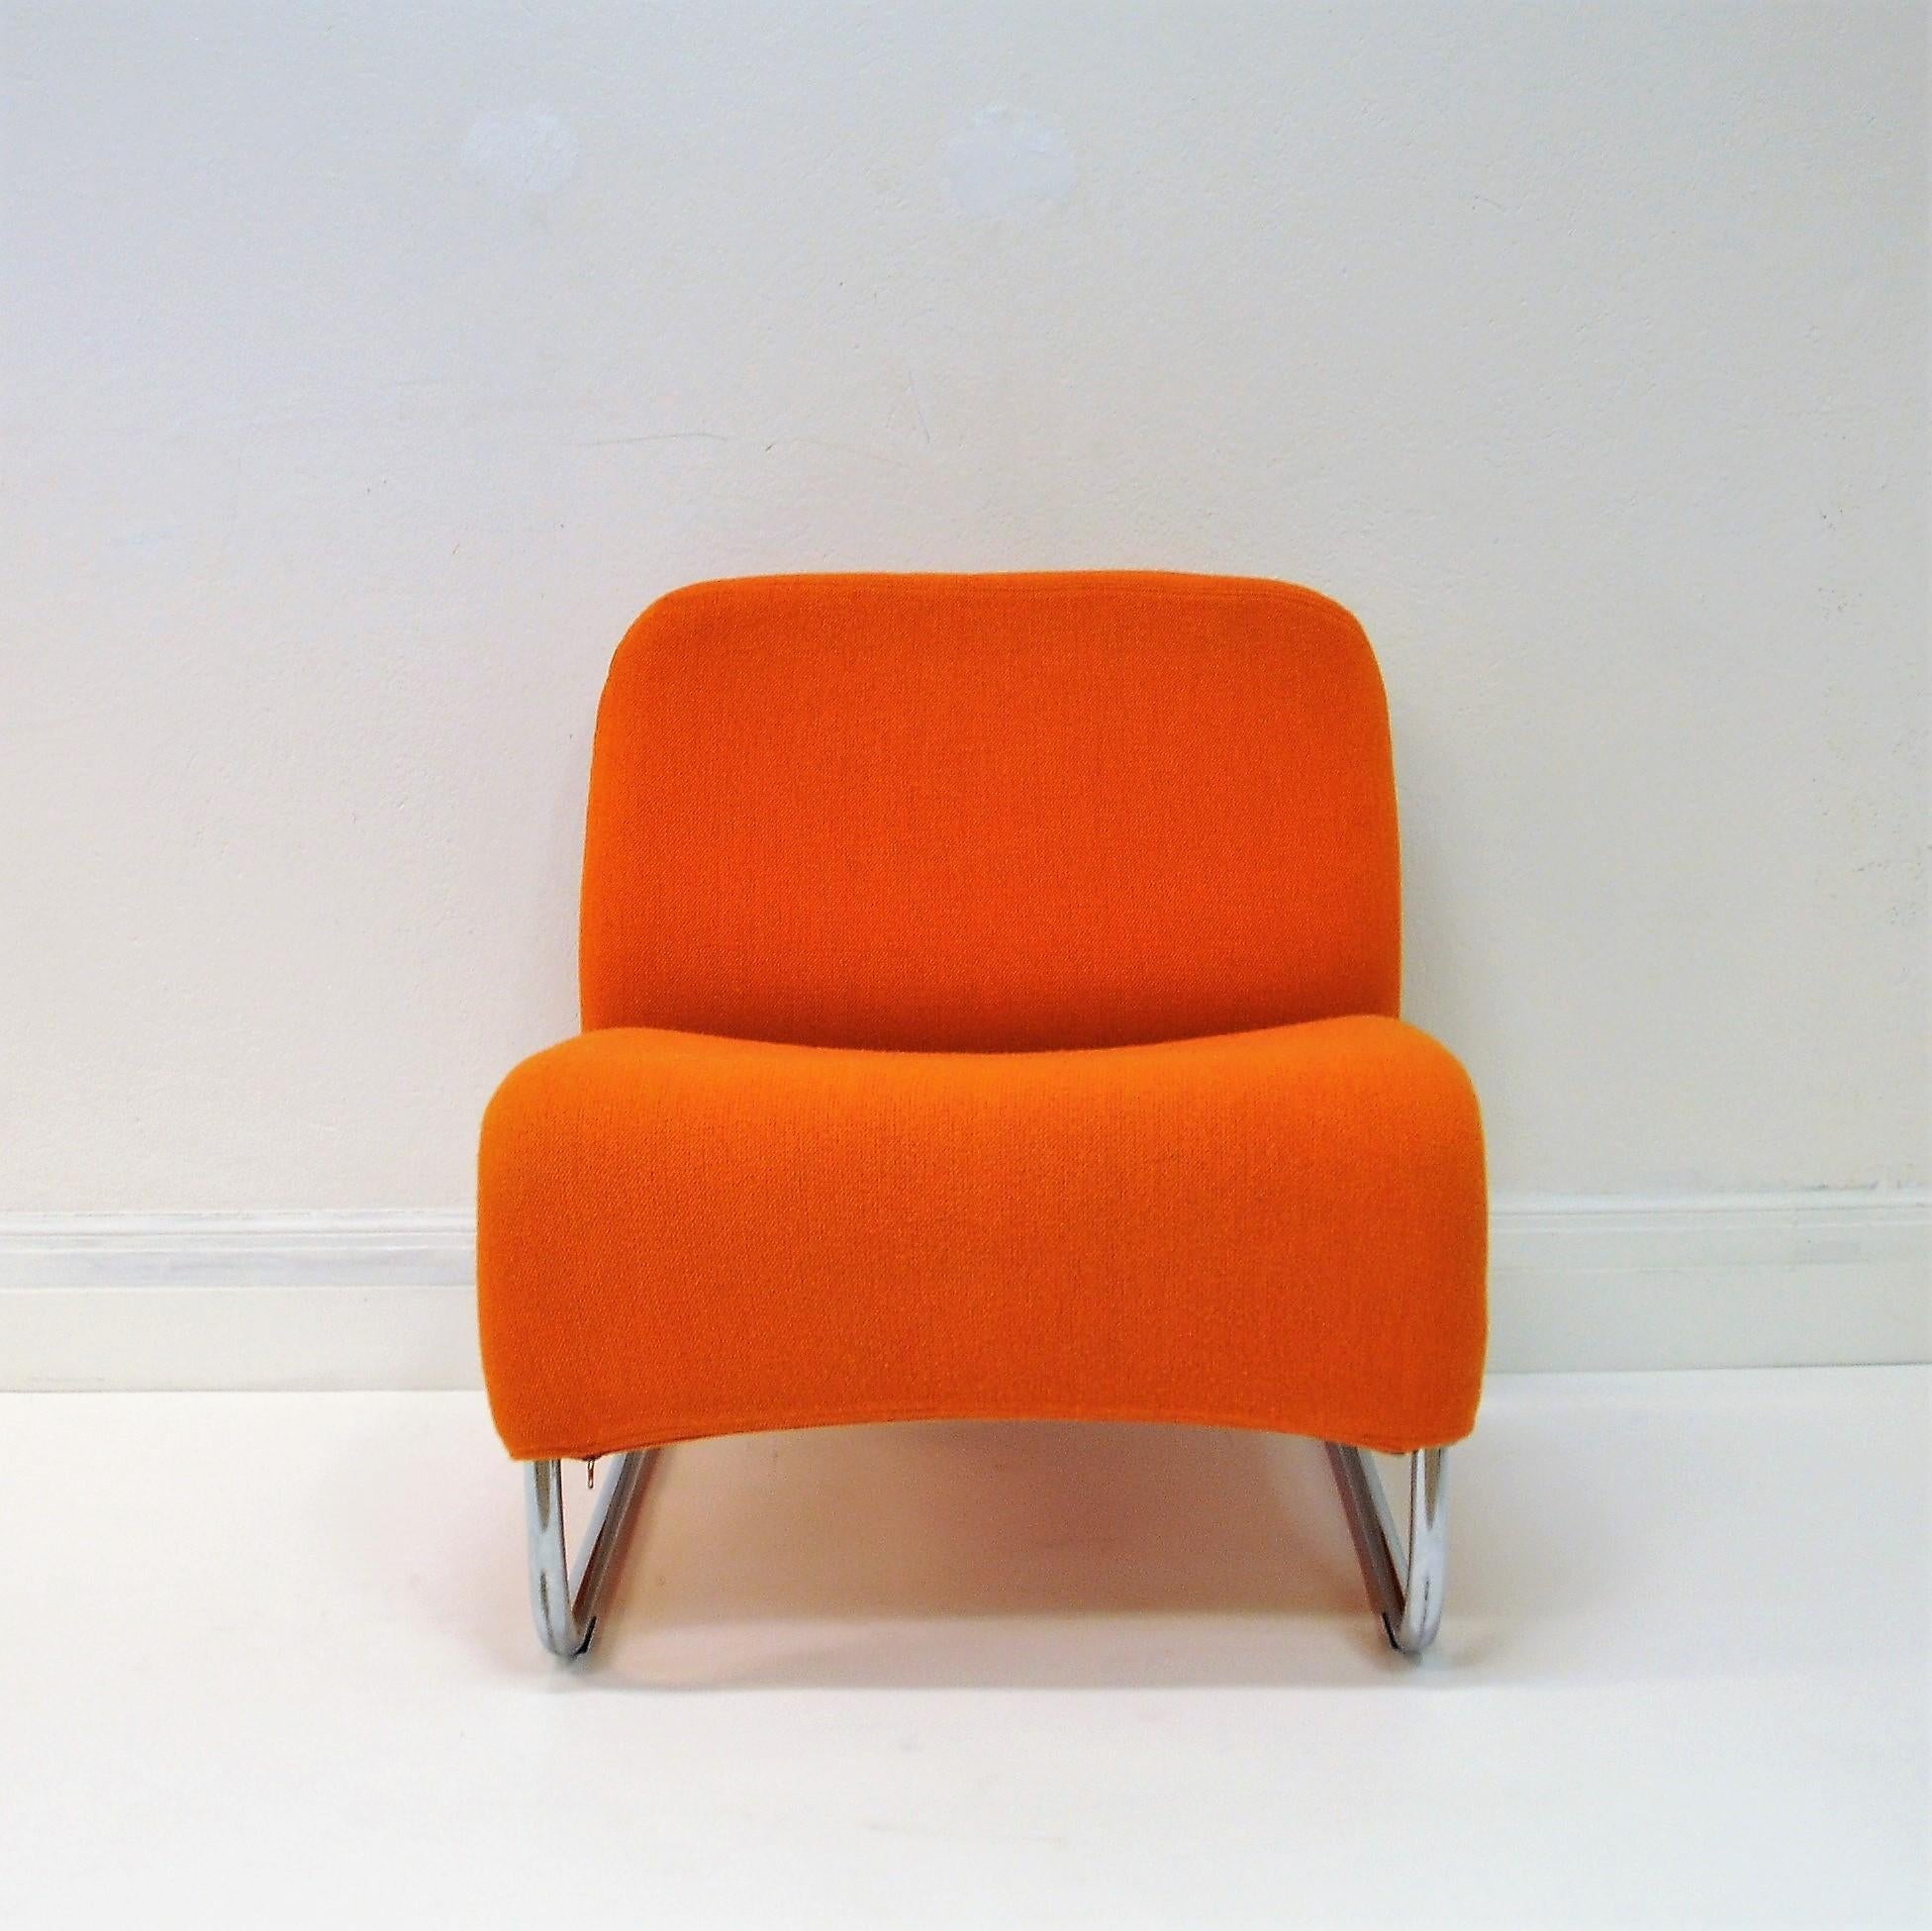 Norwegian Orange Lounge Chair Ecco by Møre Design Team 1970, Norway